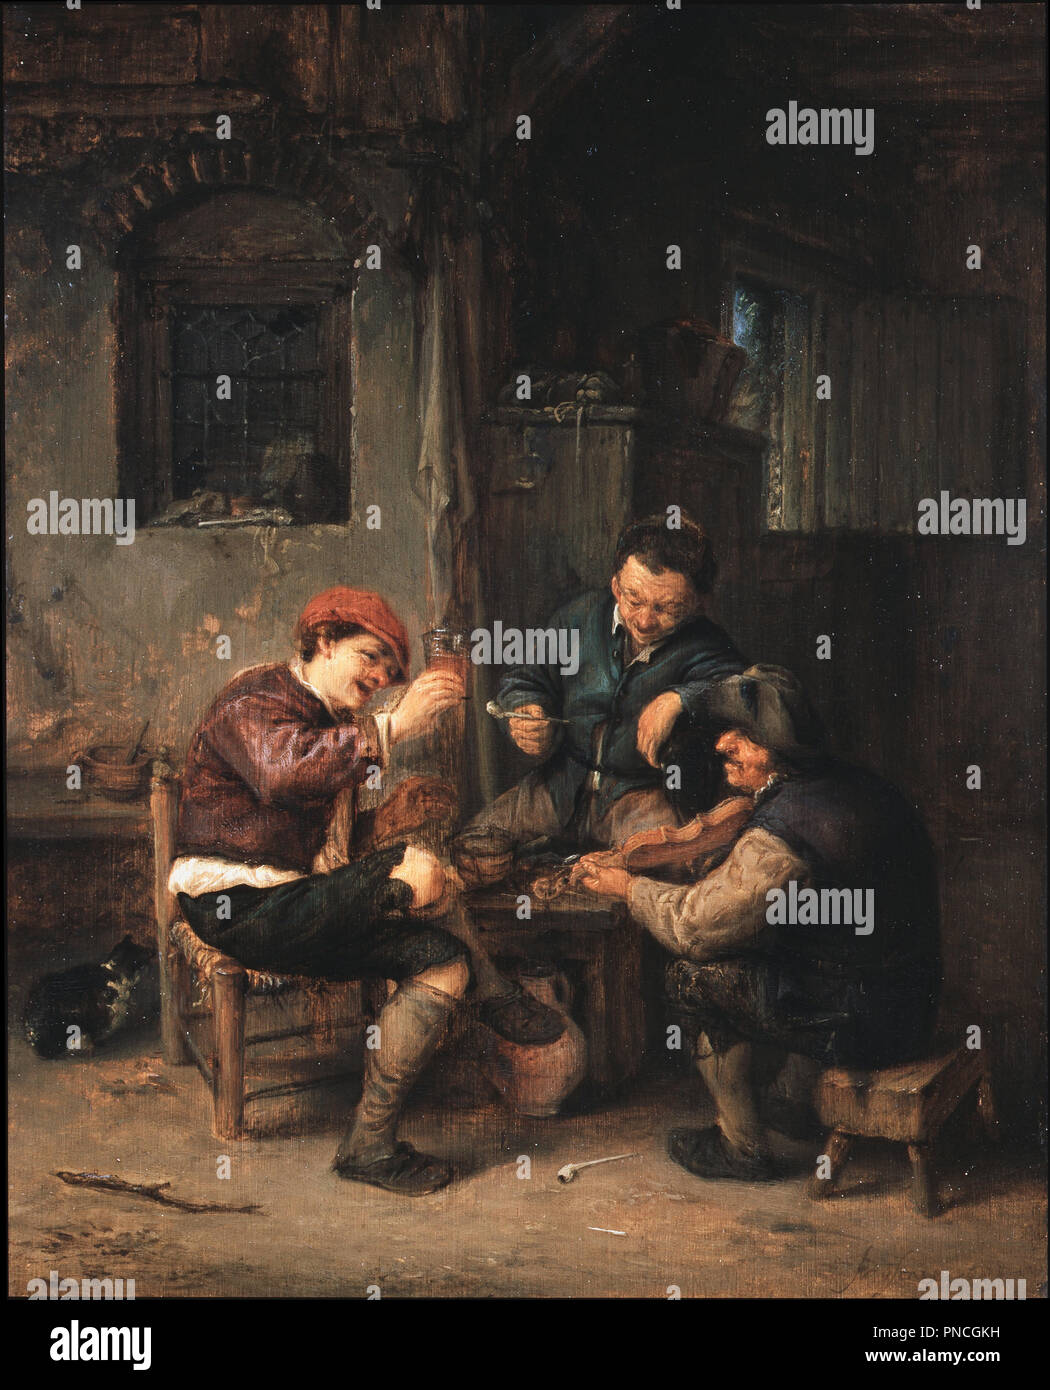 Three Peasants at an Inn. Date/Period: 1647. Painting. Oil on panel Oil. Height: 271 mm (10.66 in); Width: 216 mm (8.50 in). Author: van Ostade, Adriaen. Adriaen van Ostade. Stock Photo